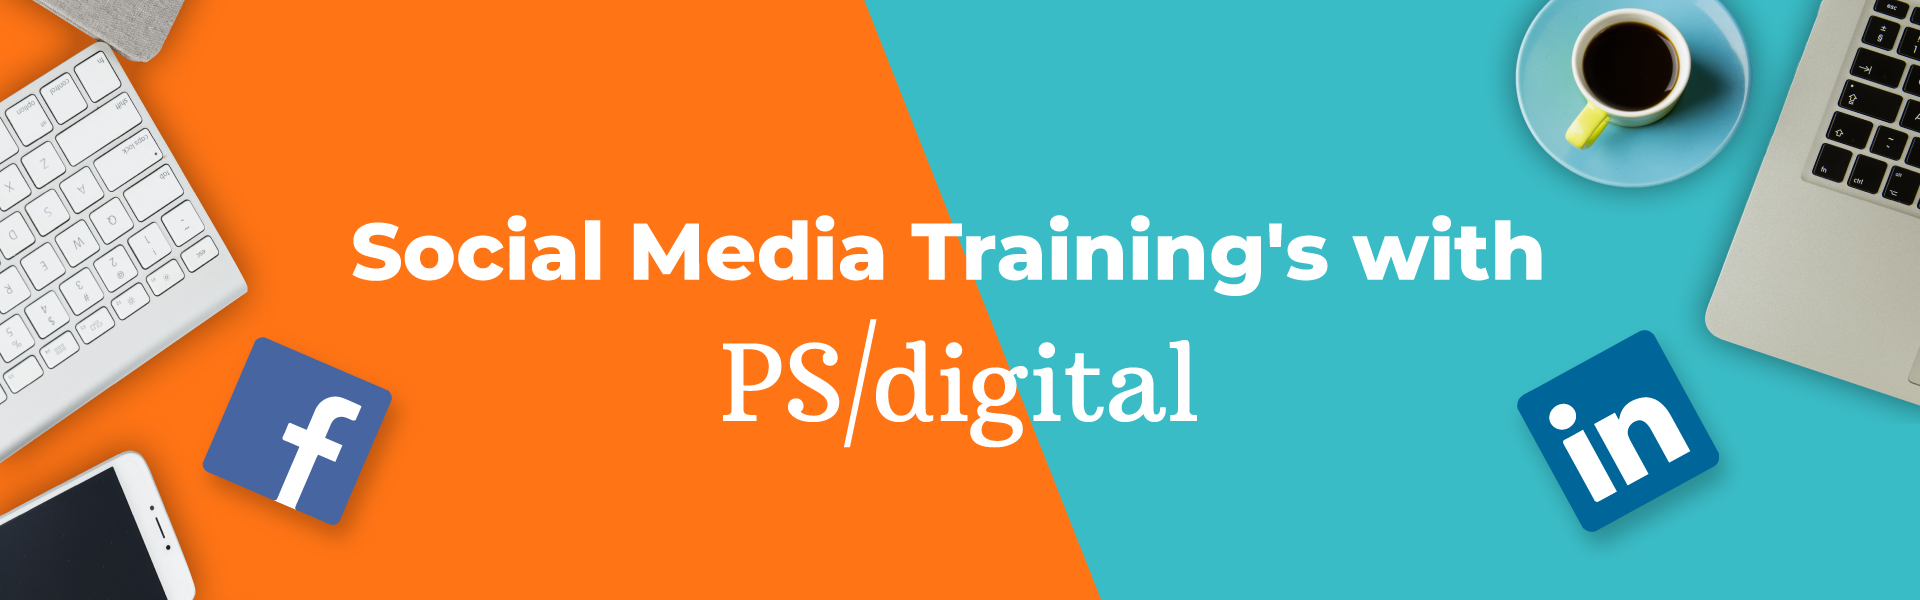 PS marketing training 04 May2020 banner